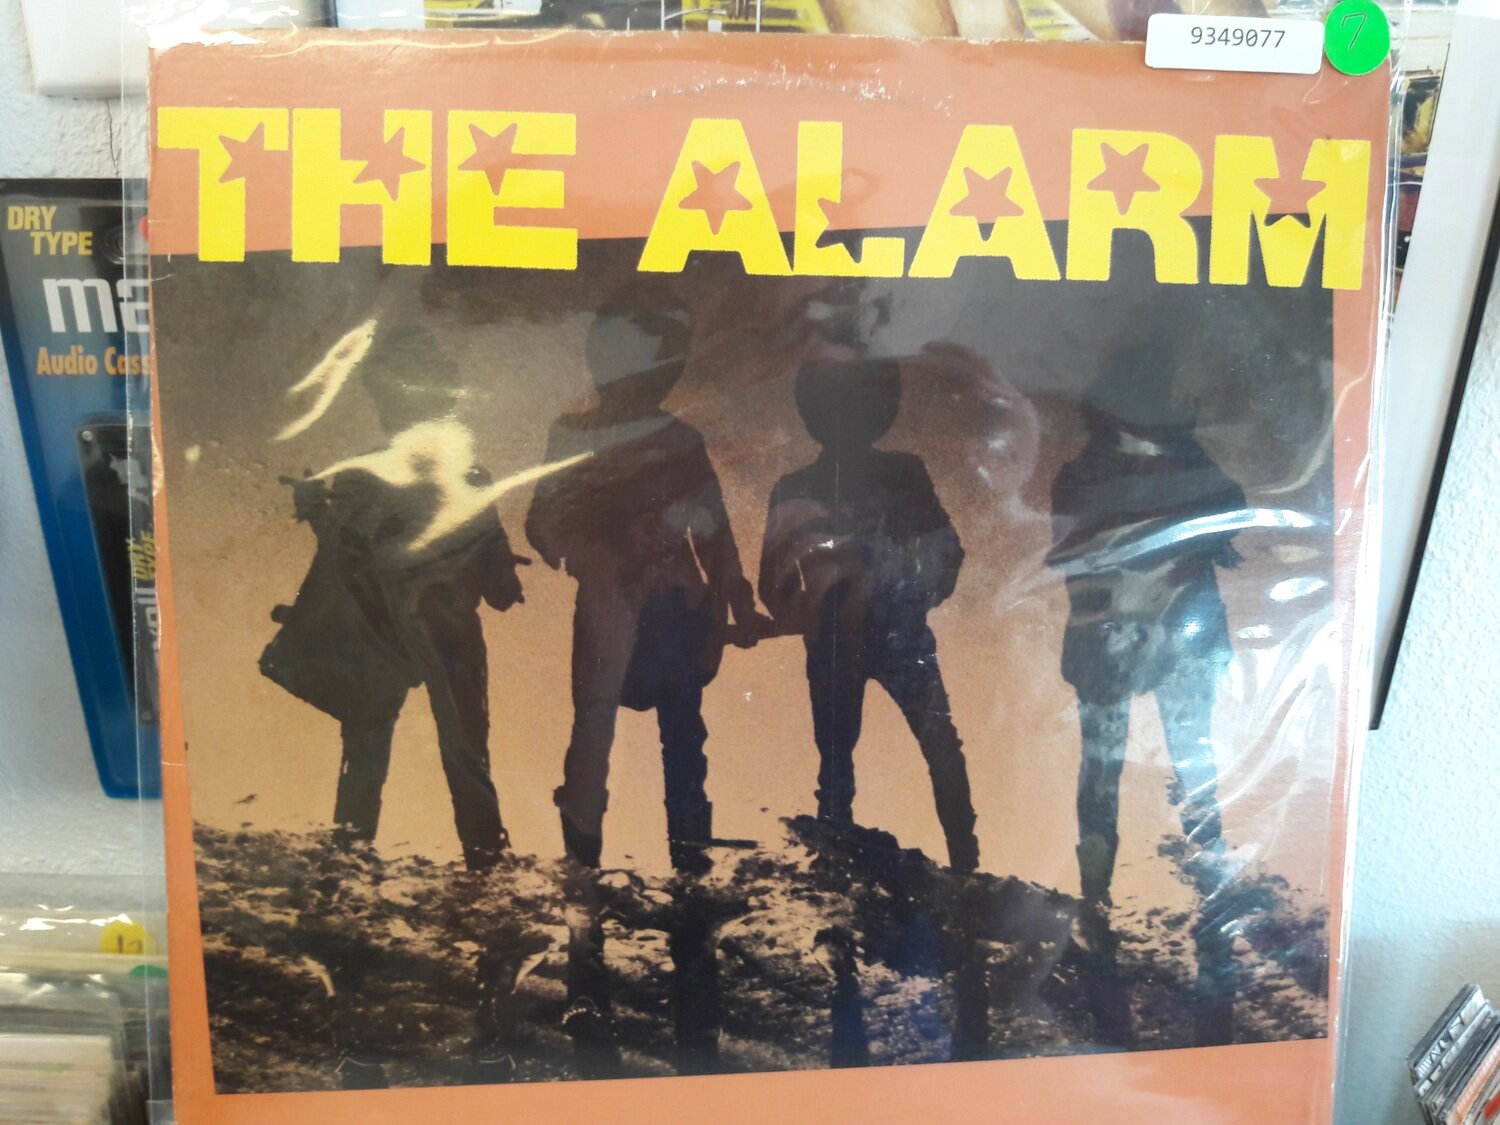 Alarm, The - The Alarm EP